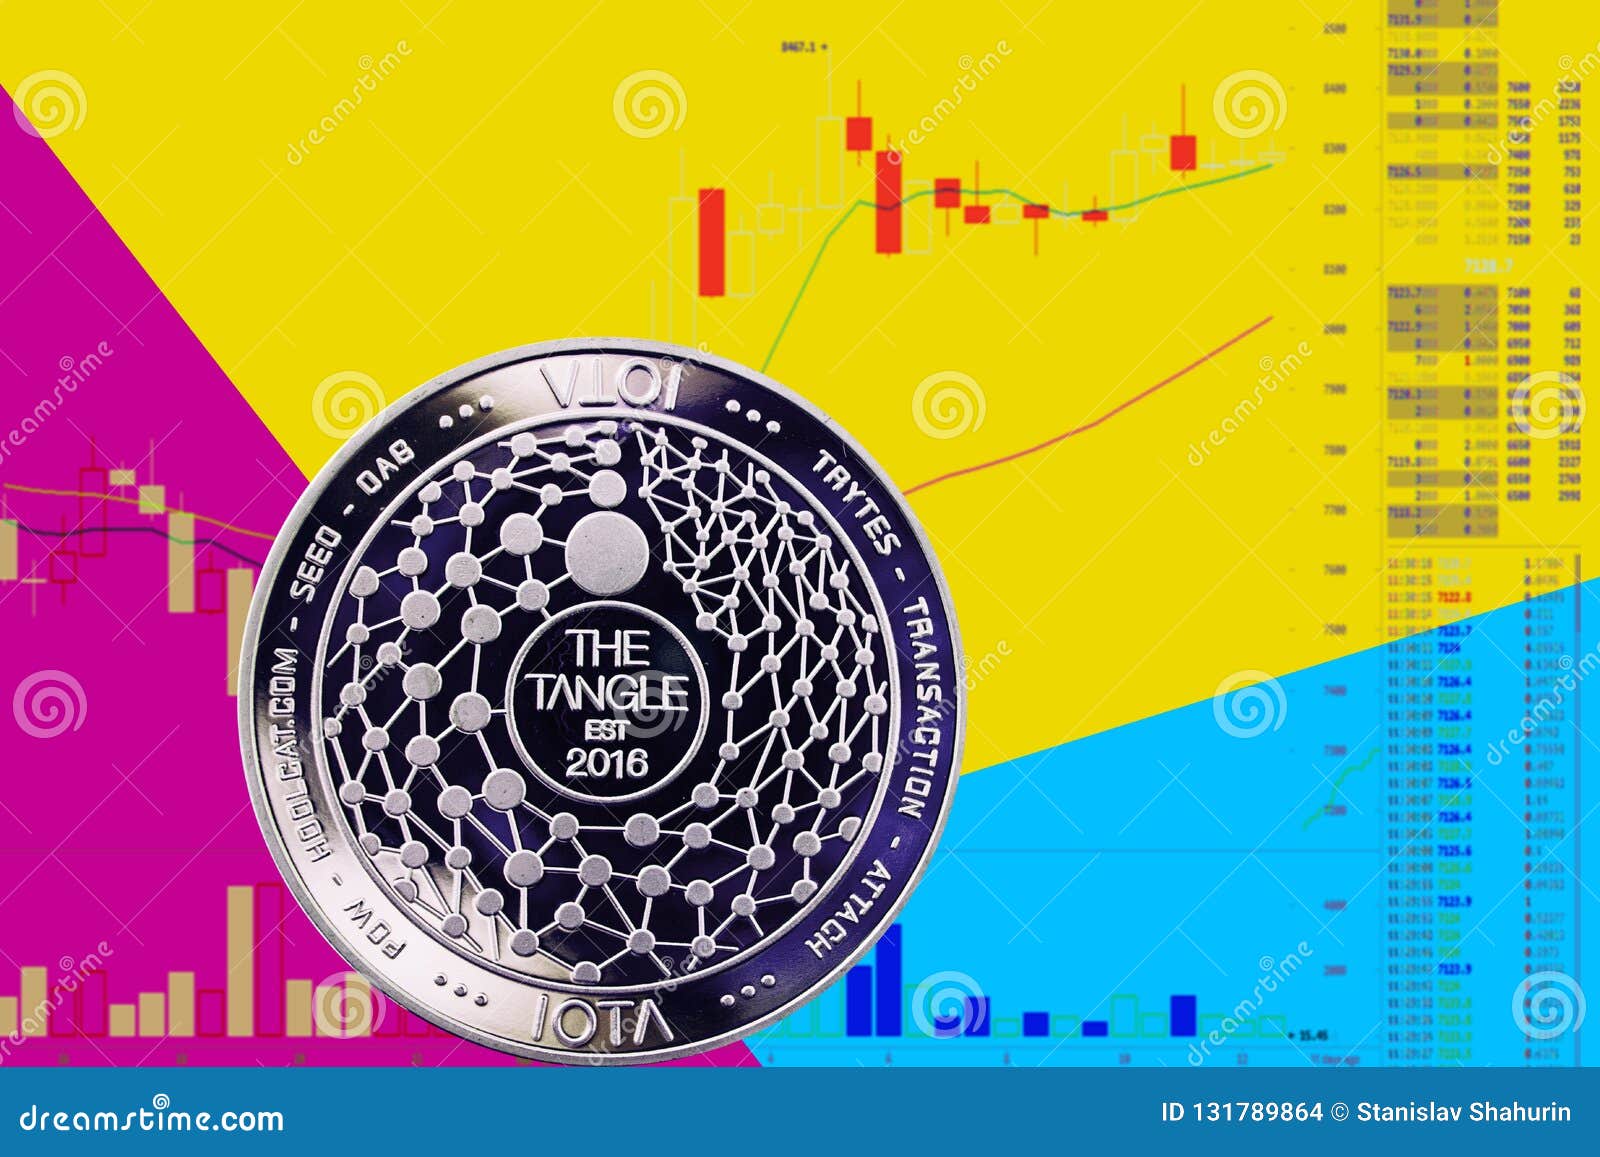 Iota Coin Chart